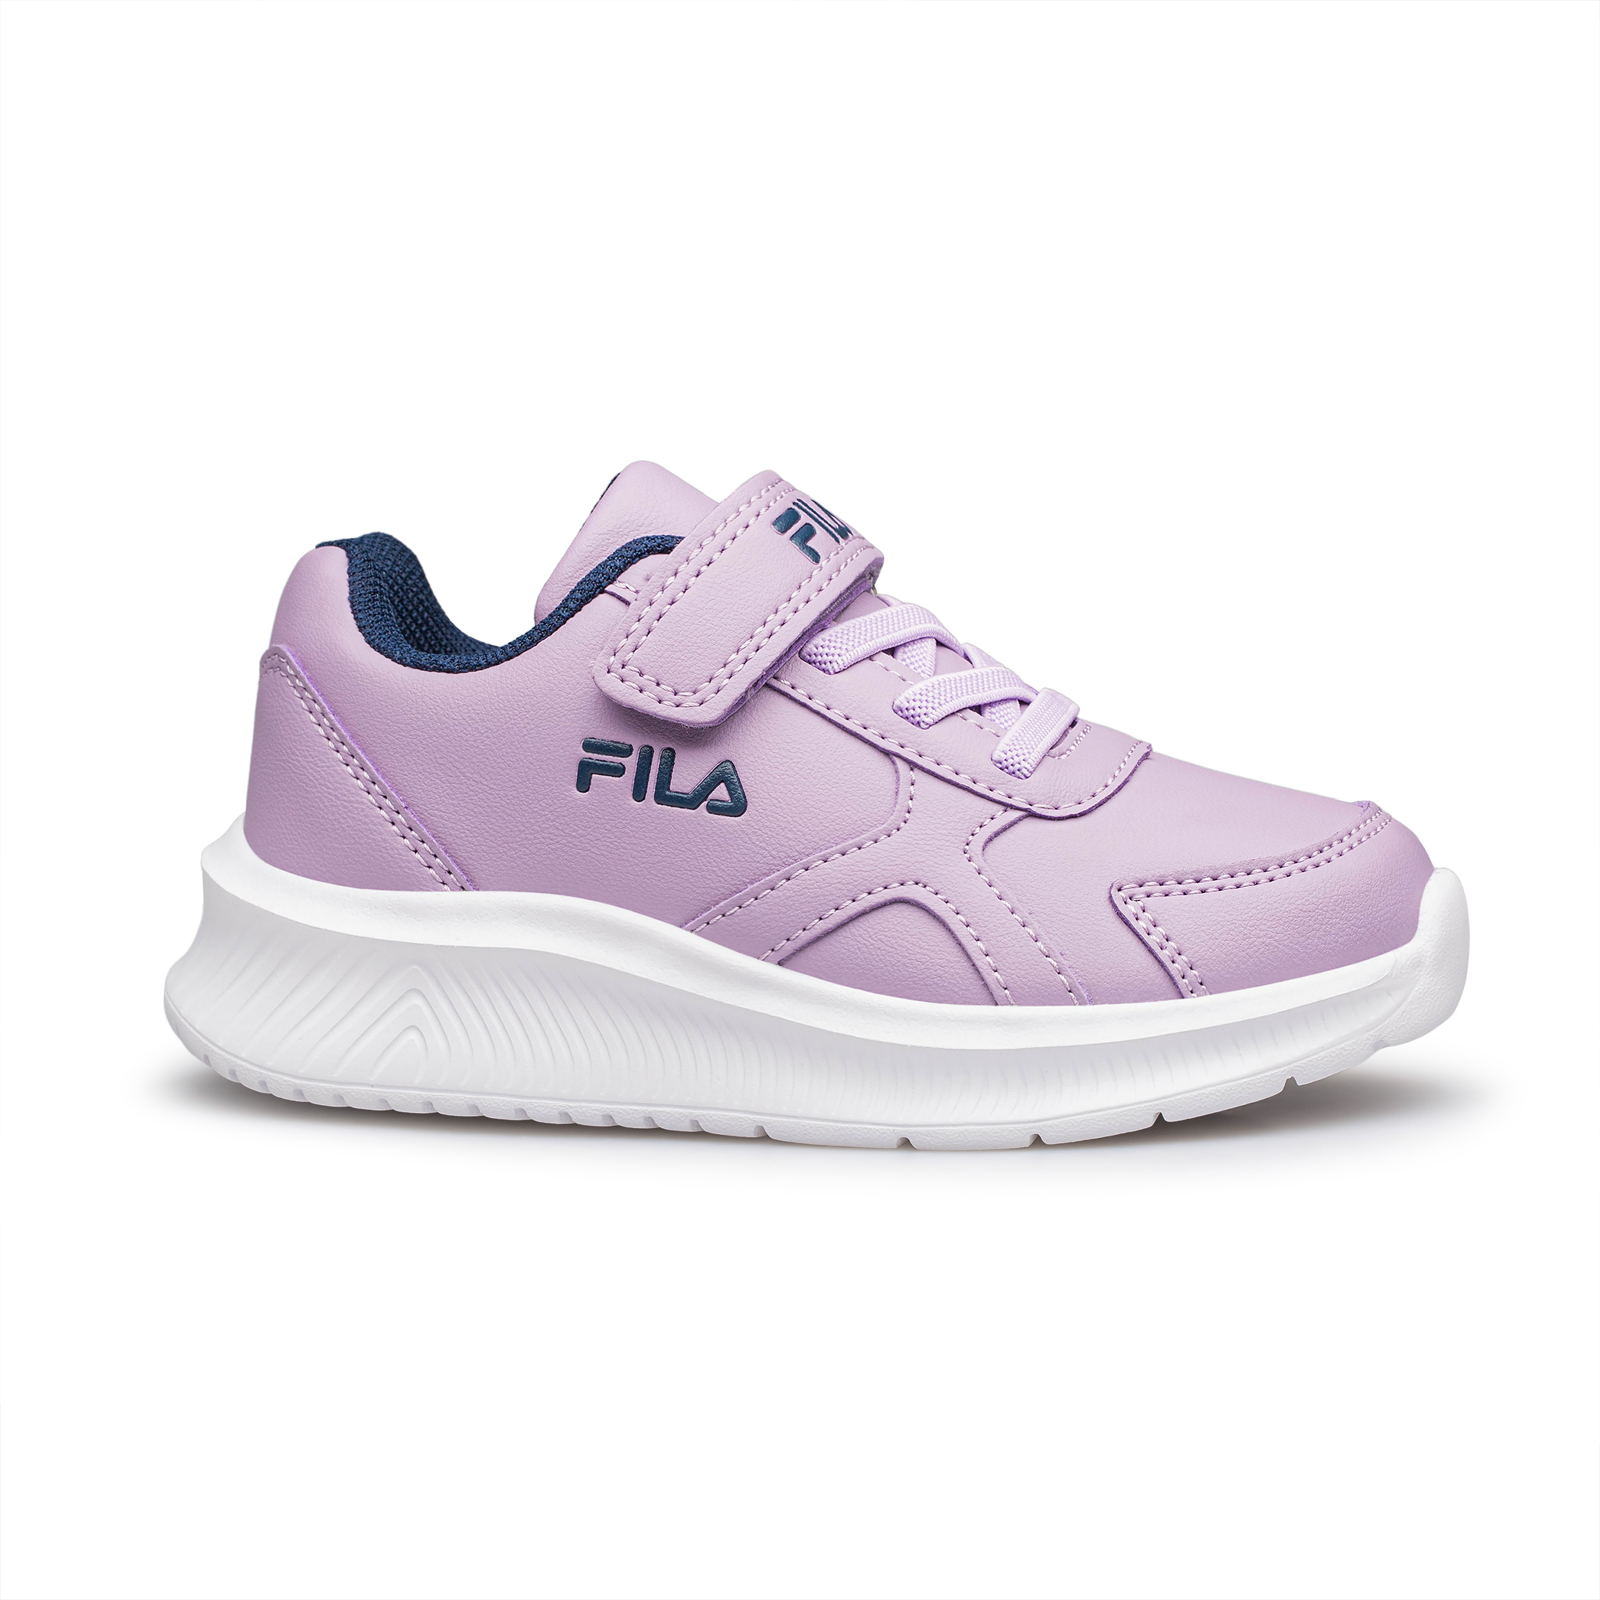 Fila - BRETT 4 V FOOTWEAR - MAUVE DARK BLUE Παιδικά > Παπούτσια > Αθλητικά > Παπούτσι Low Cut